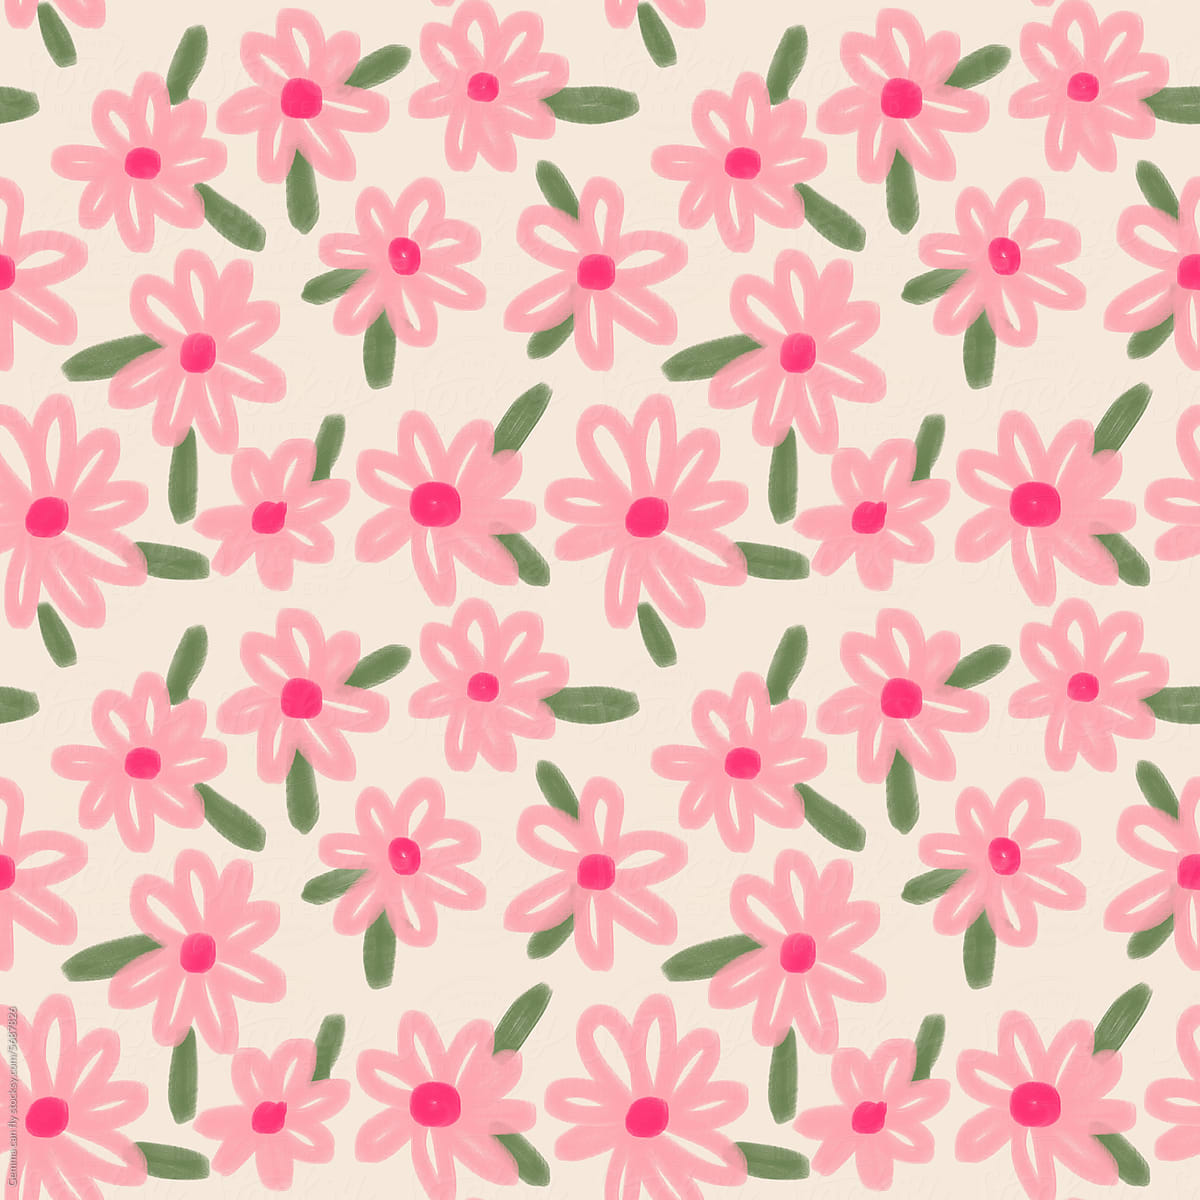 Spring dasies flowers seamless pattern illustration